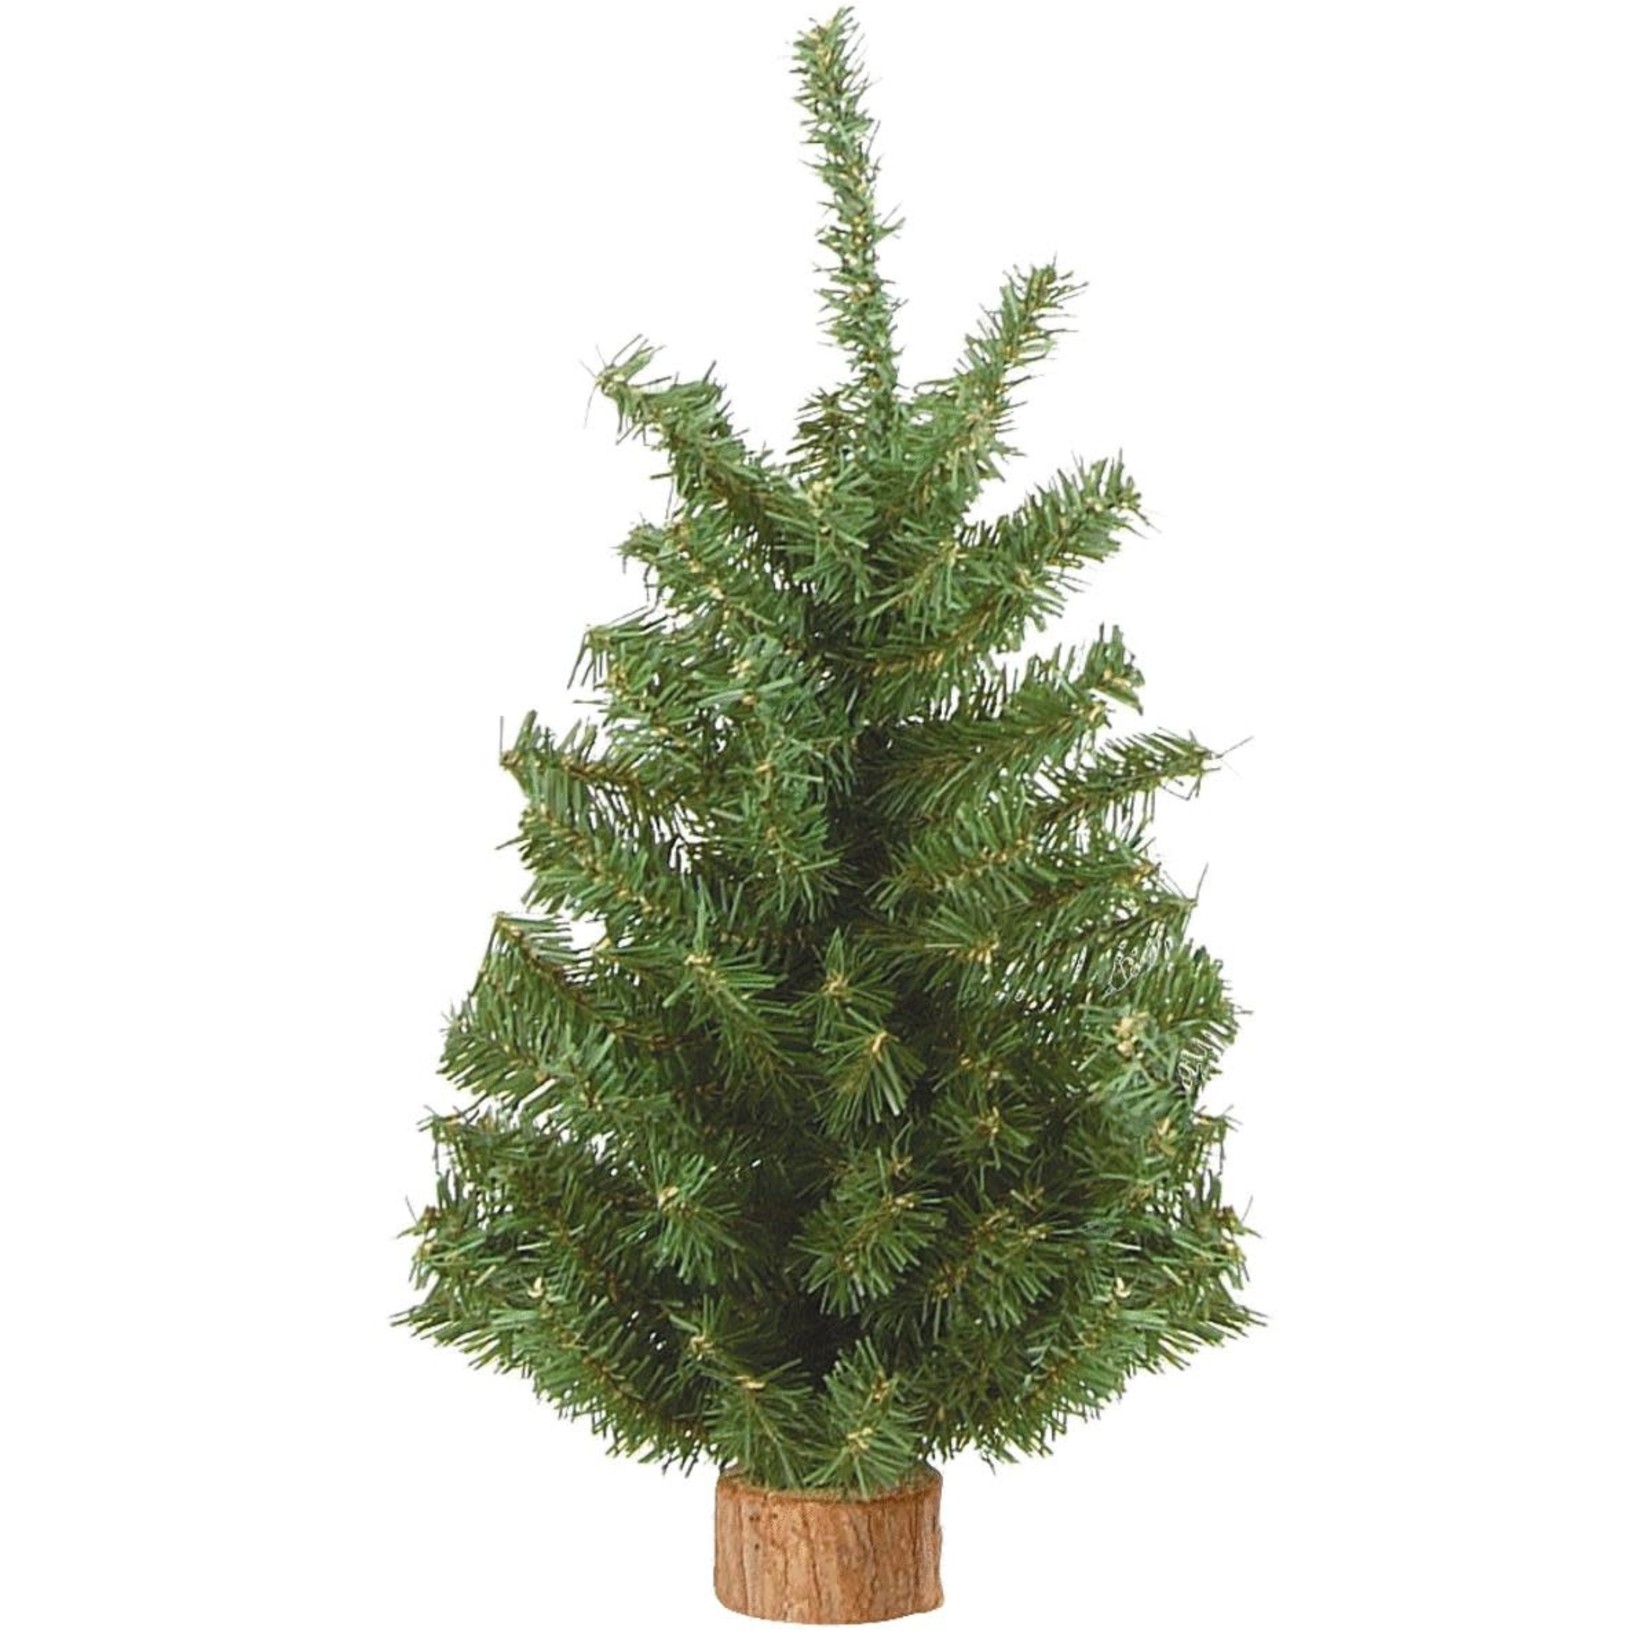 15" Canadian Pine tree